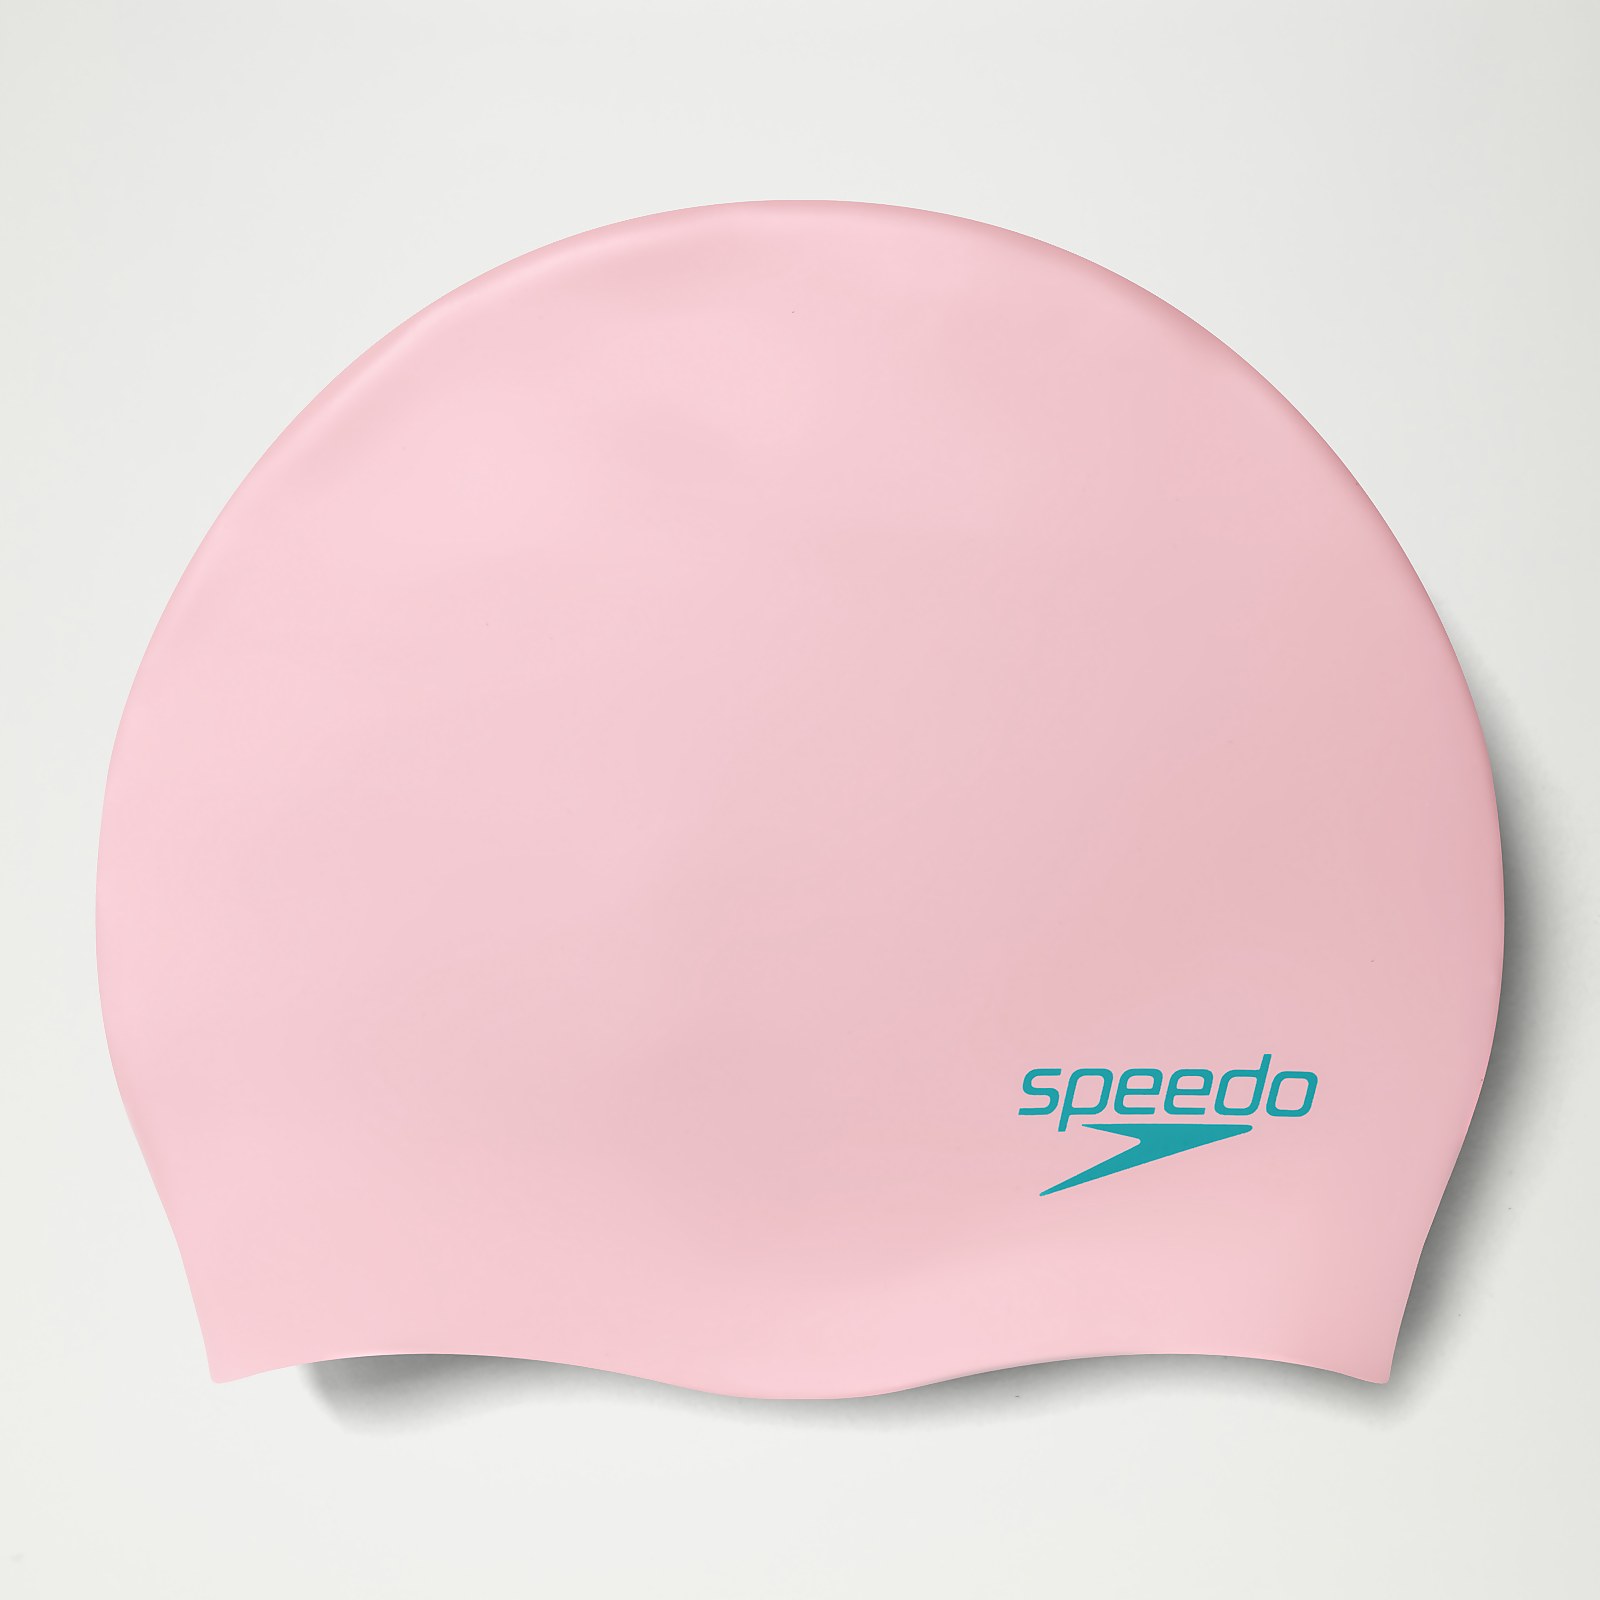 Geformte Silikon-Badekappe für Kinder Pink